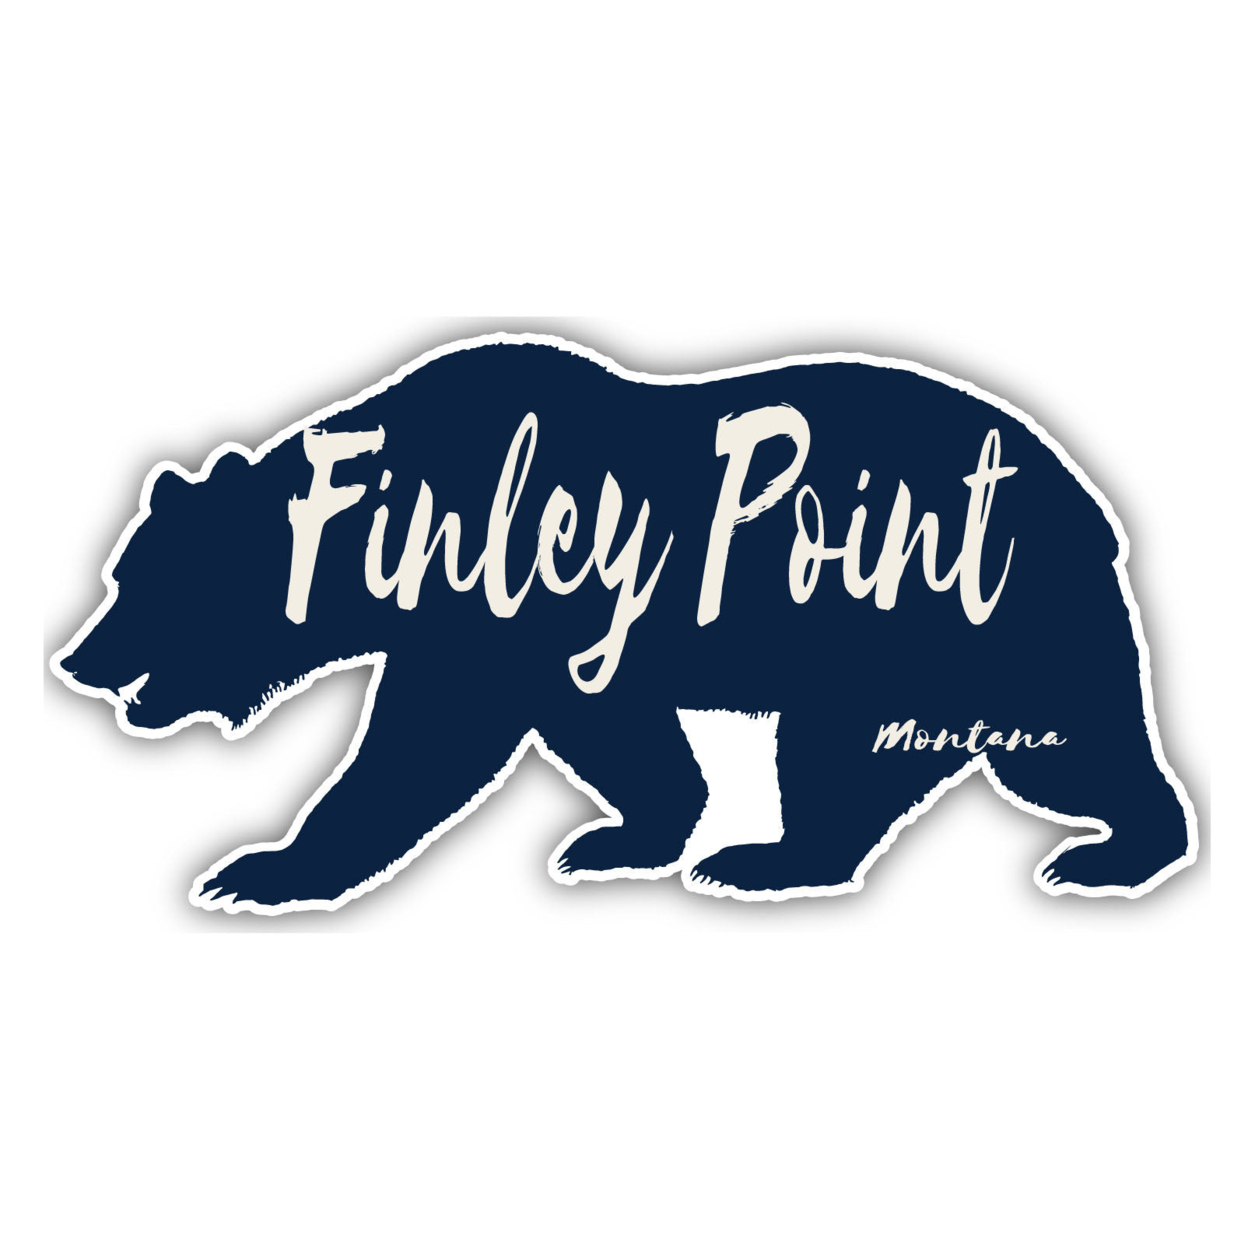 Finley Point Montana Souvenir Decorative Stickers (Choose Theme And Size) - Single Unit, 8-Inch, Bear